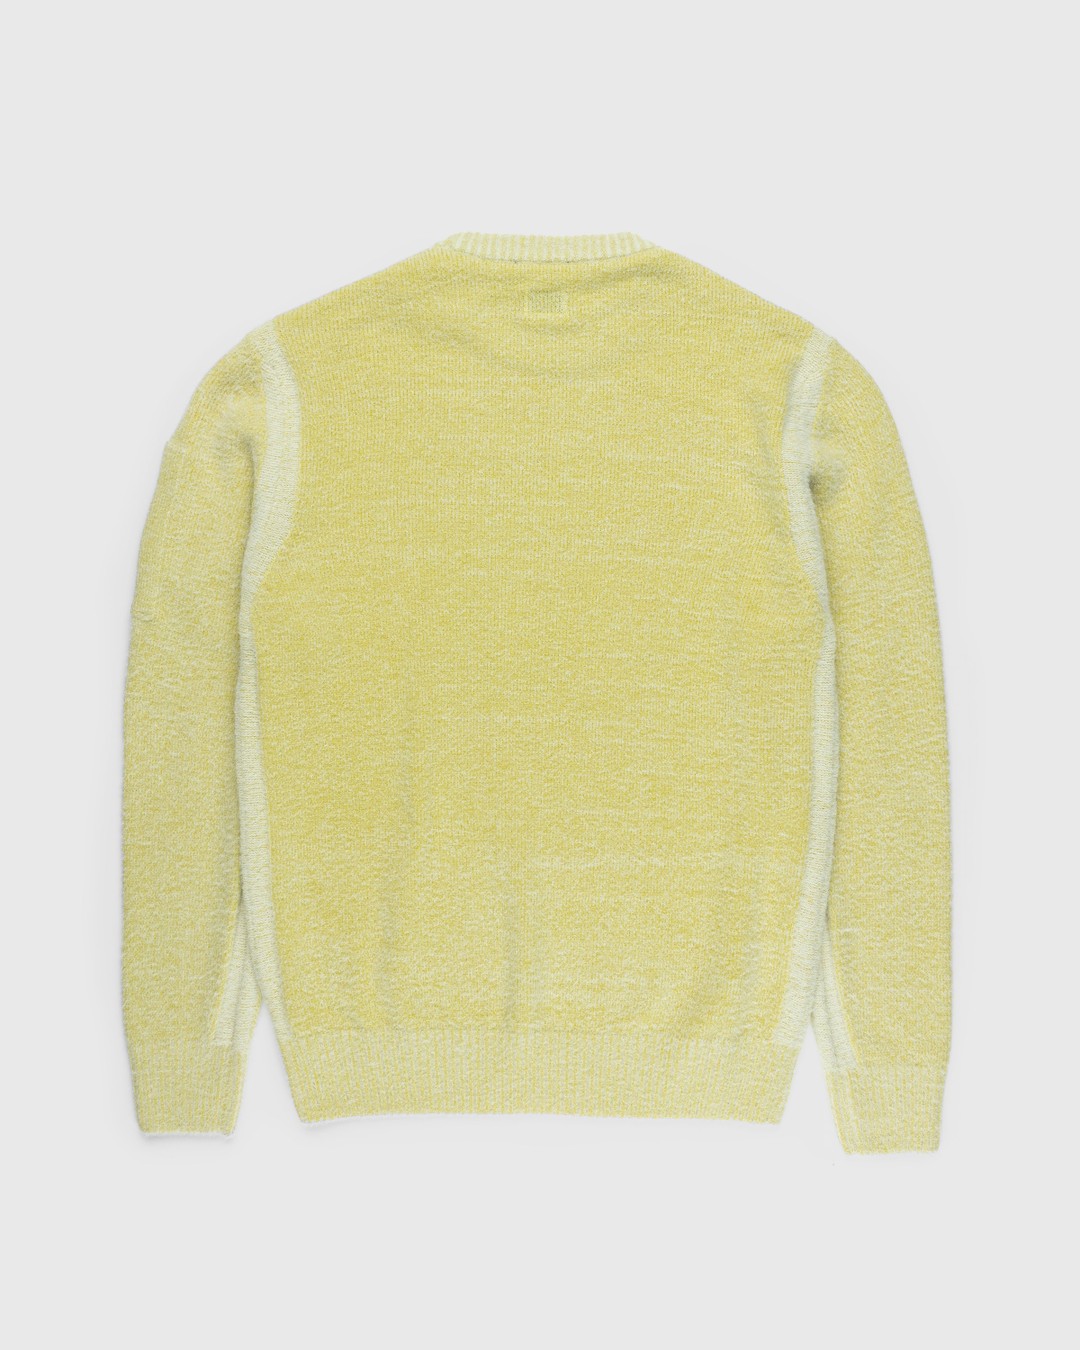 C.P. Company – Fleece Knit Jumper Yellow - Knitwear - Yellow - Image 2